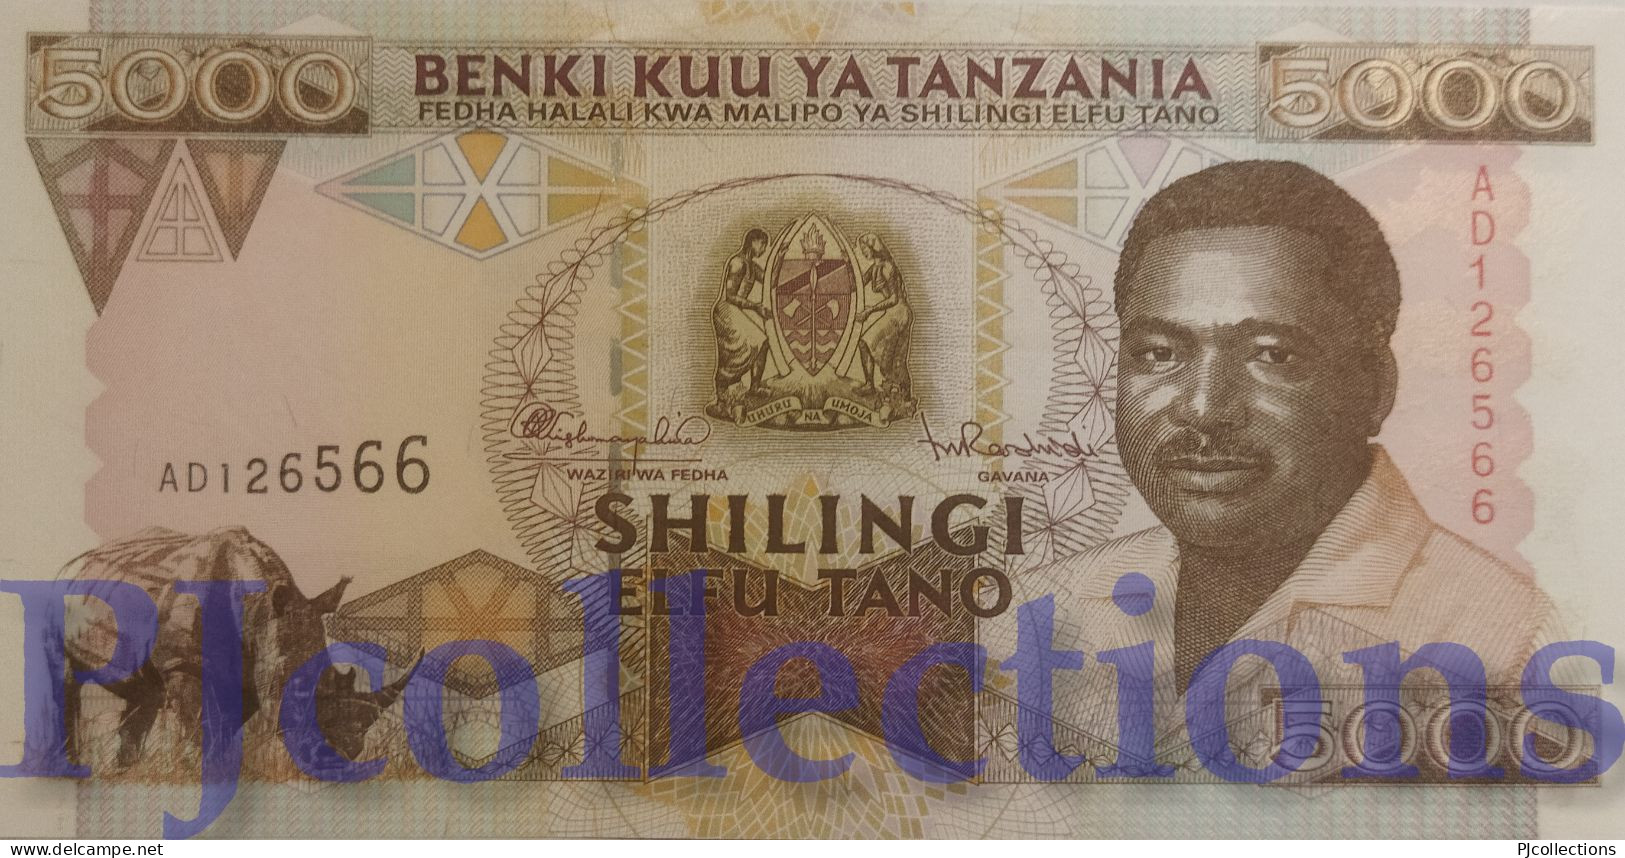 TANZANIA 5000 SHILINGI 1995 PICK 28 UNC - Tanzanie